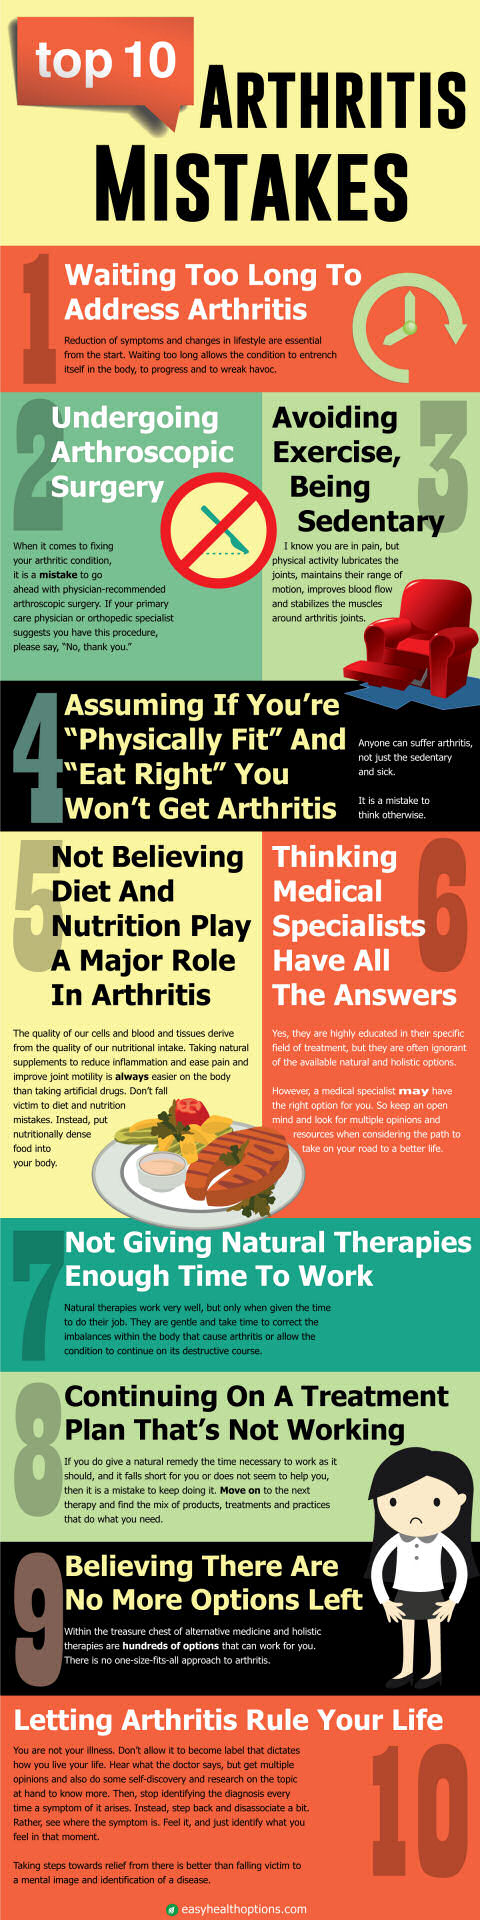 Top Ten Arthritis Mistakes